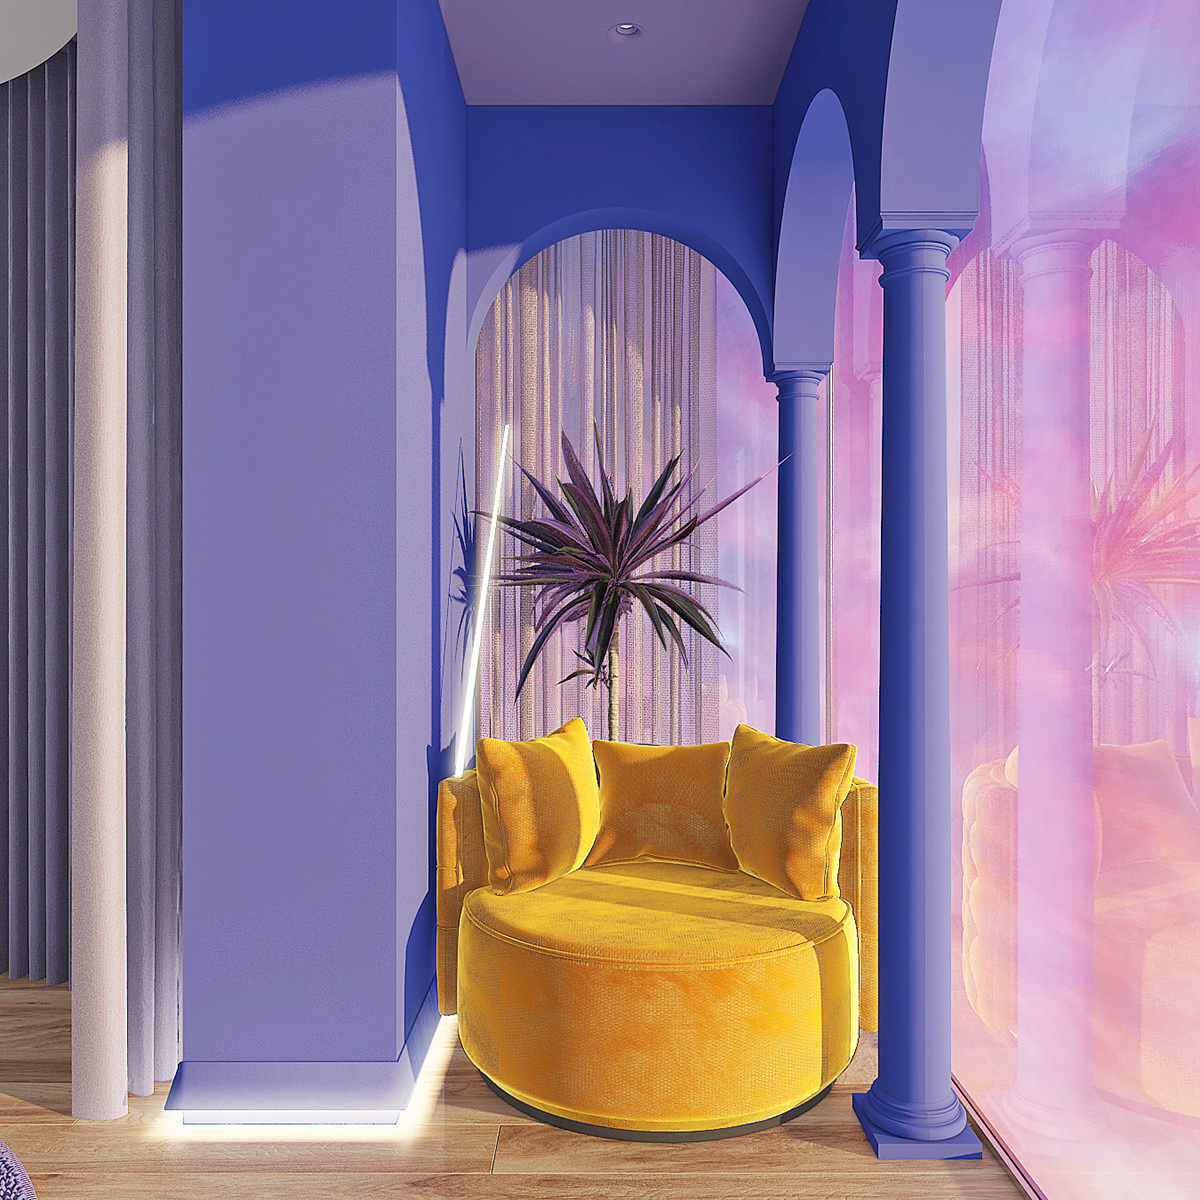 3D 3dmodel apartement architecture interior design  INTERIOR RENDERING Render Residential interior visualization